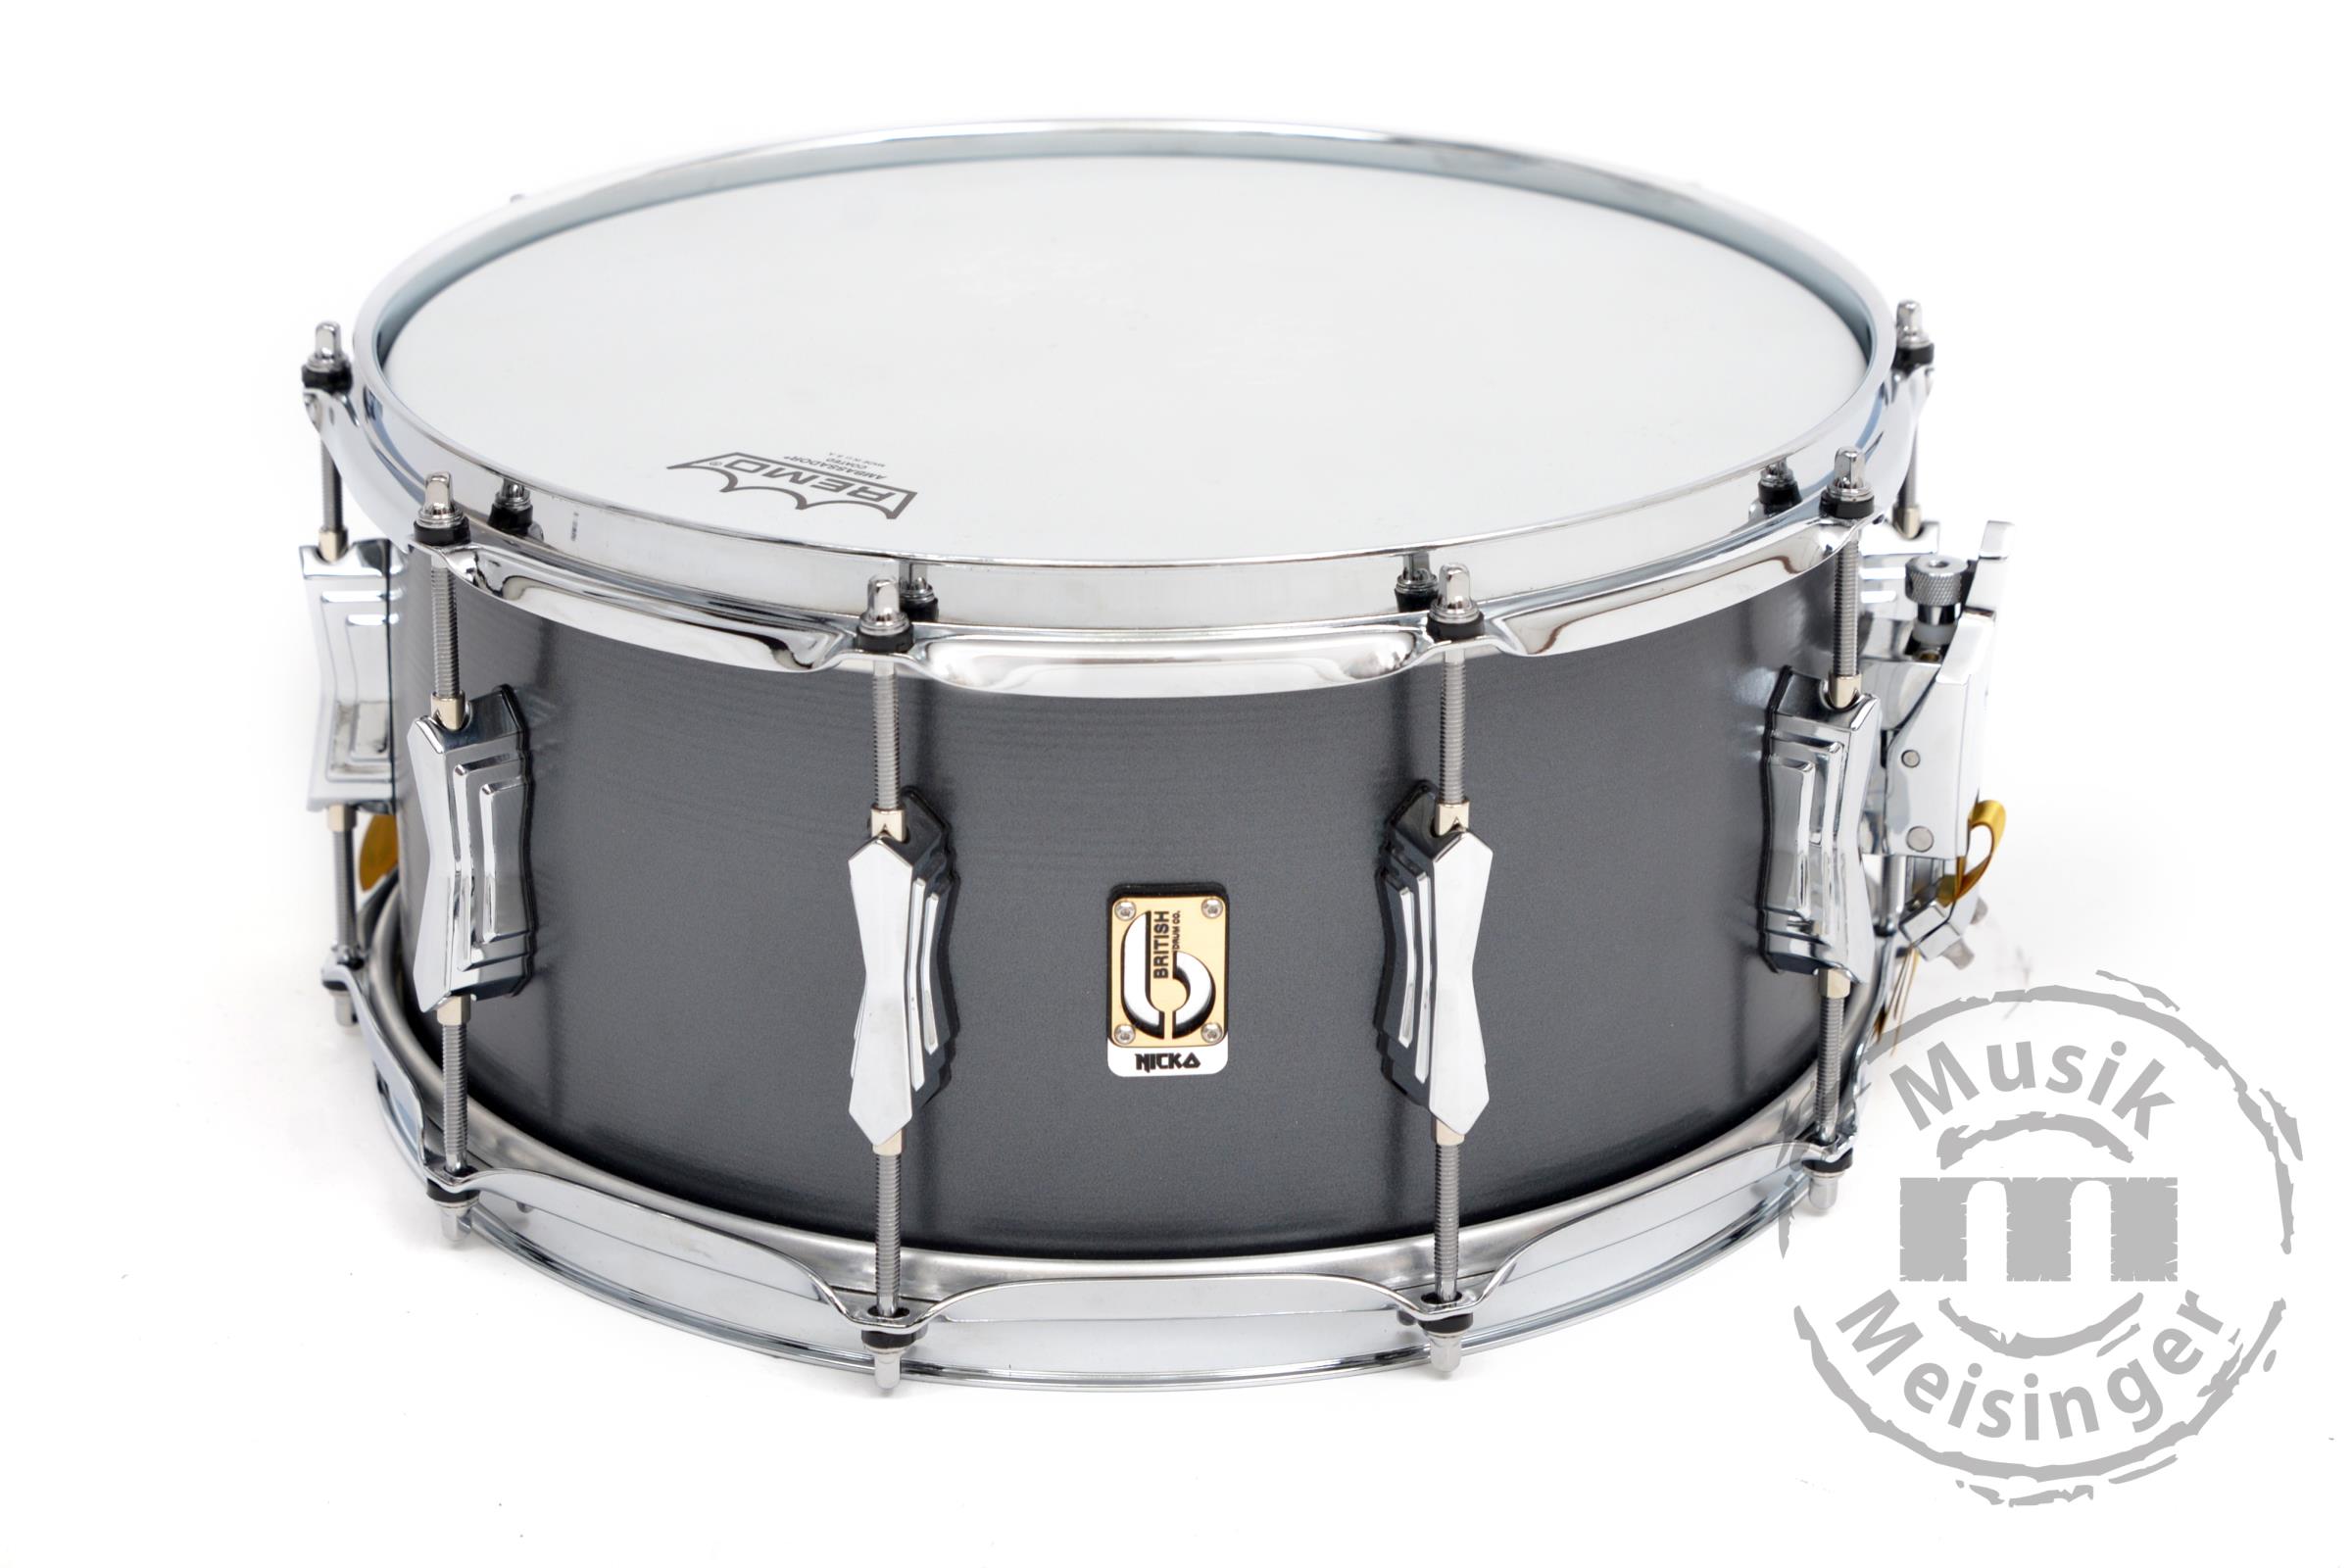 British Drum Company 14x6,5 Talisman Snare (Nicko McBrain)